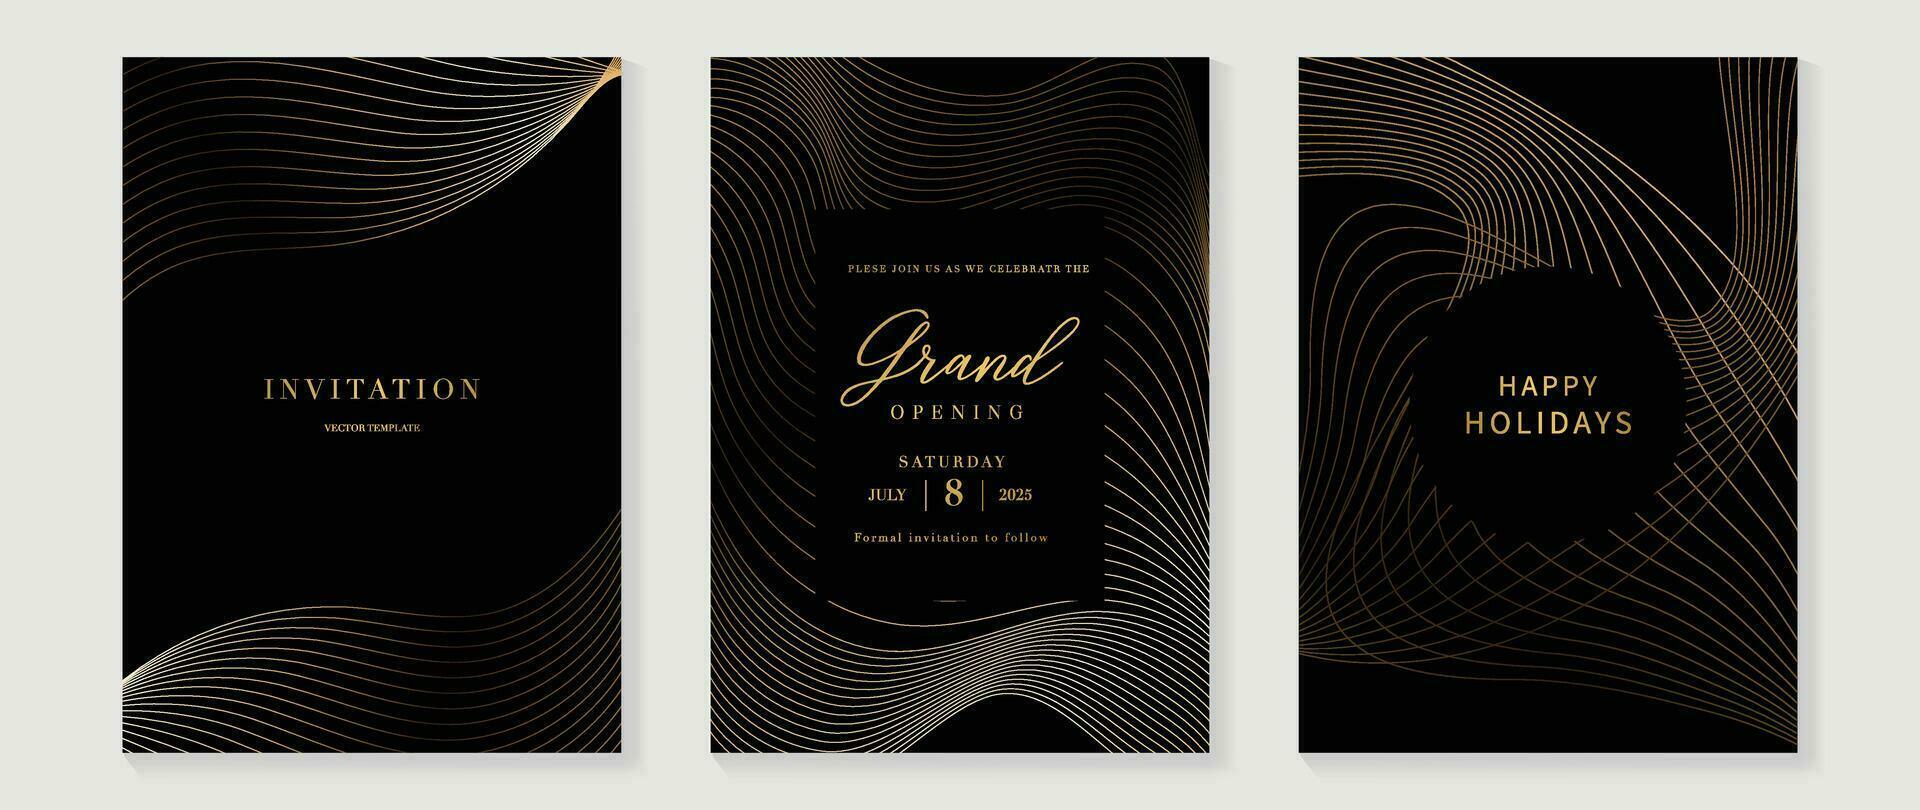 Luxury invitation card background vector. Golden curve elegant, gold line gradient on dark color background. Premium design illustration for gala card, grand opening, party invitation, wedding. vector